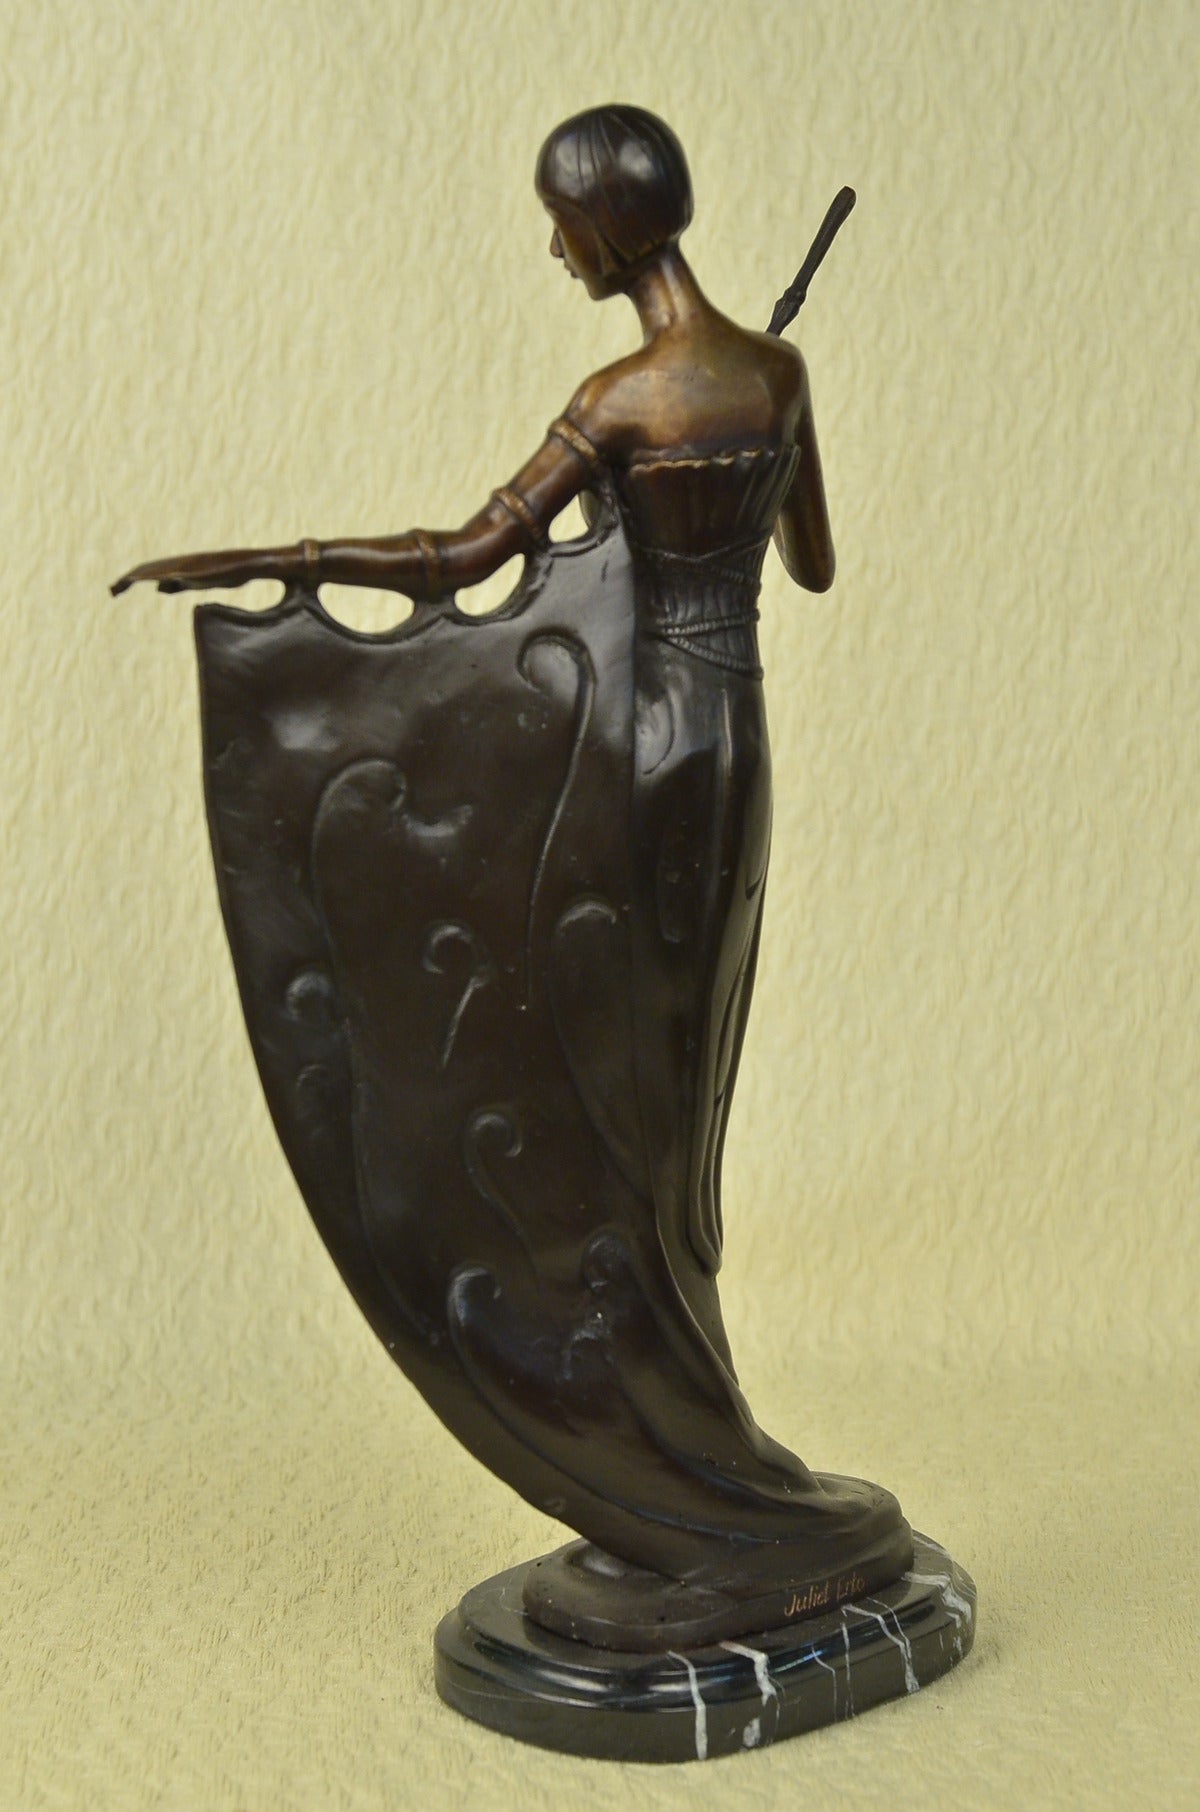 Handcrafted bronze sculpture SALE Dancer Nude Deco Art Base Marble On Cast Hot